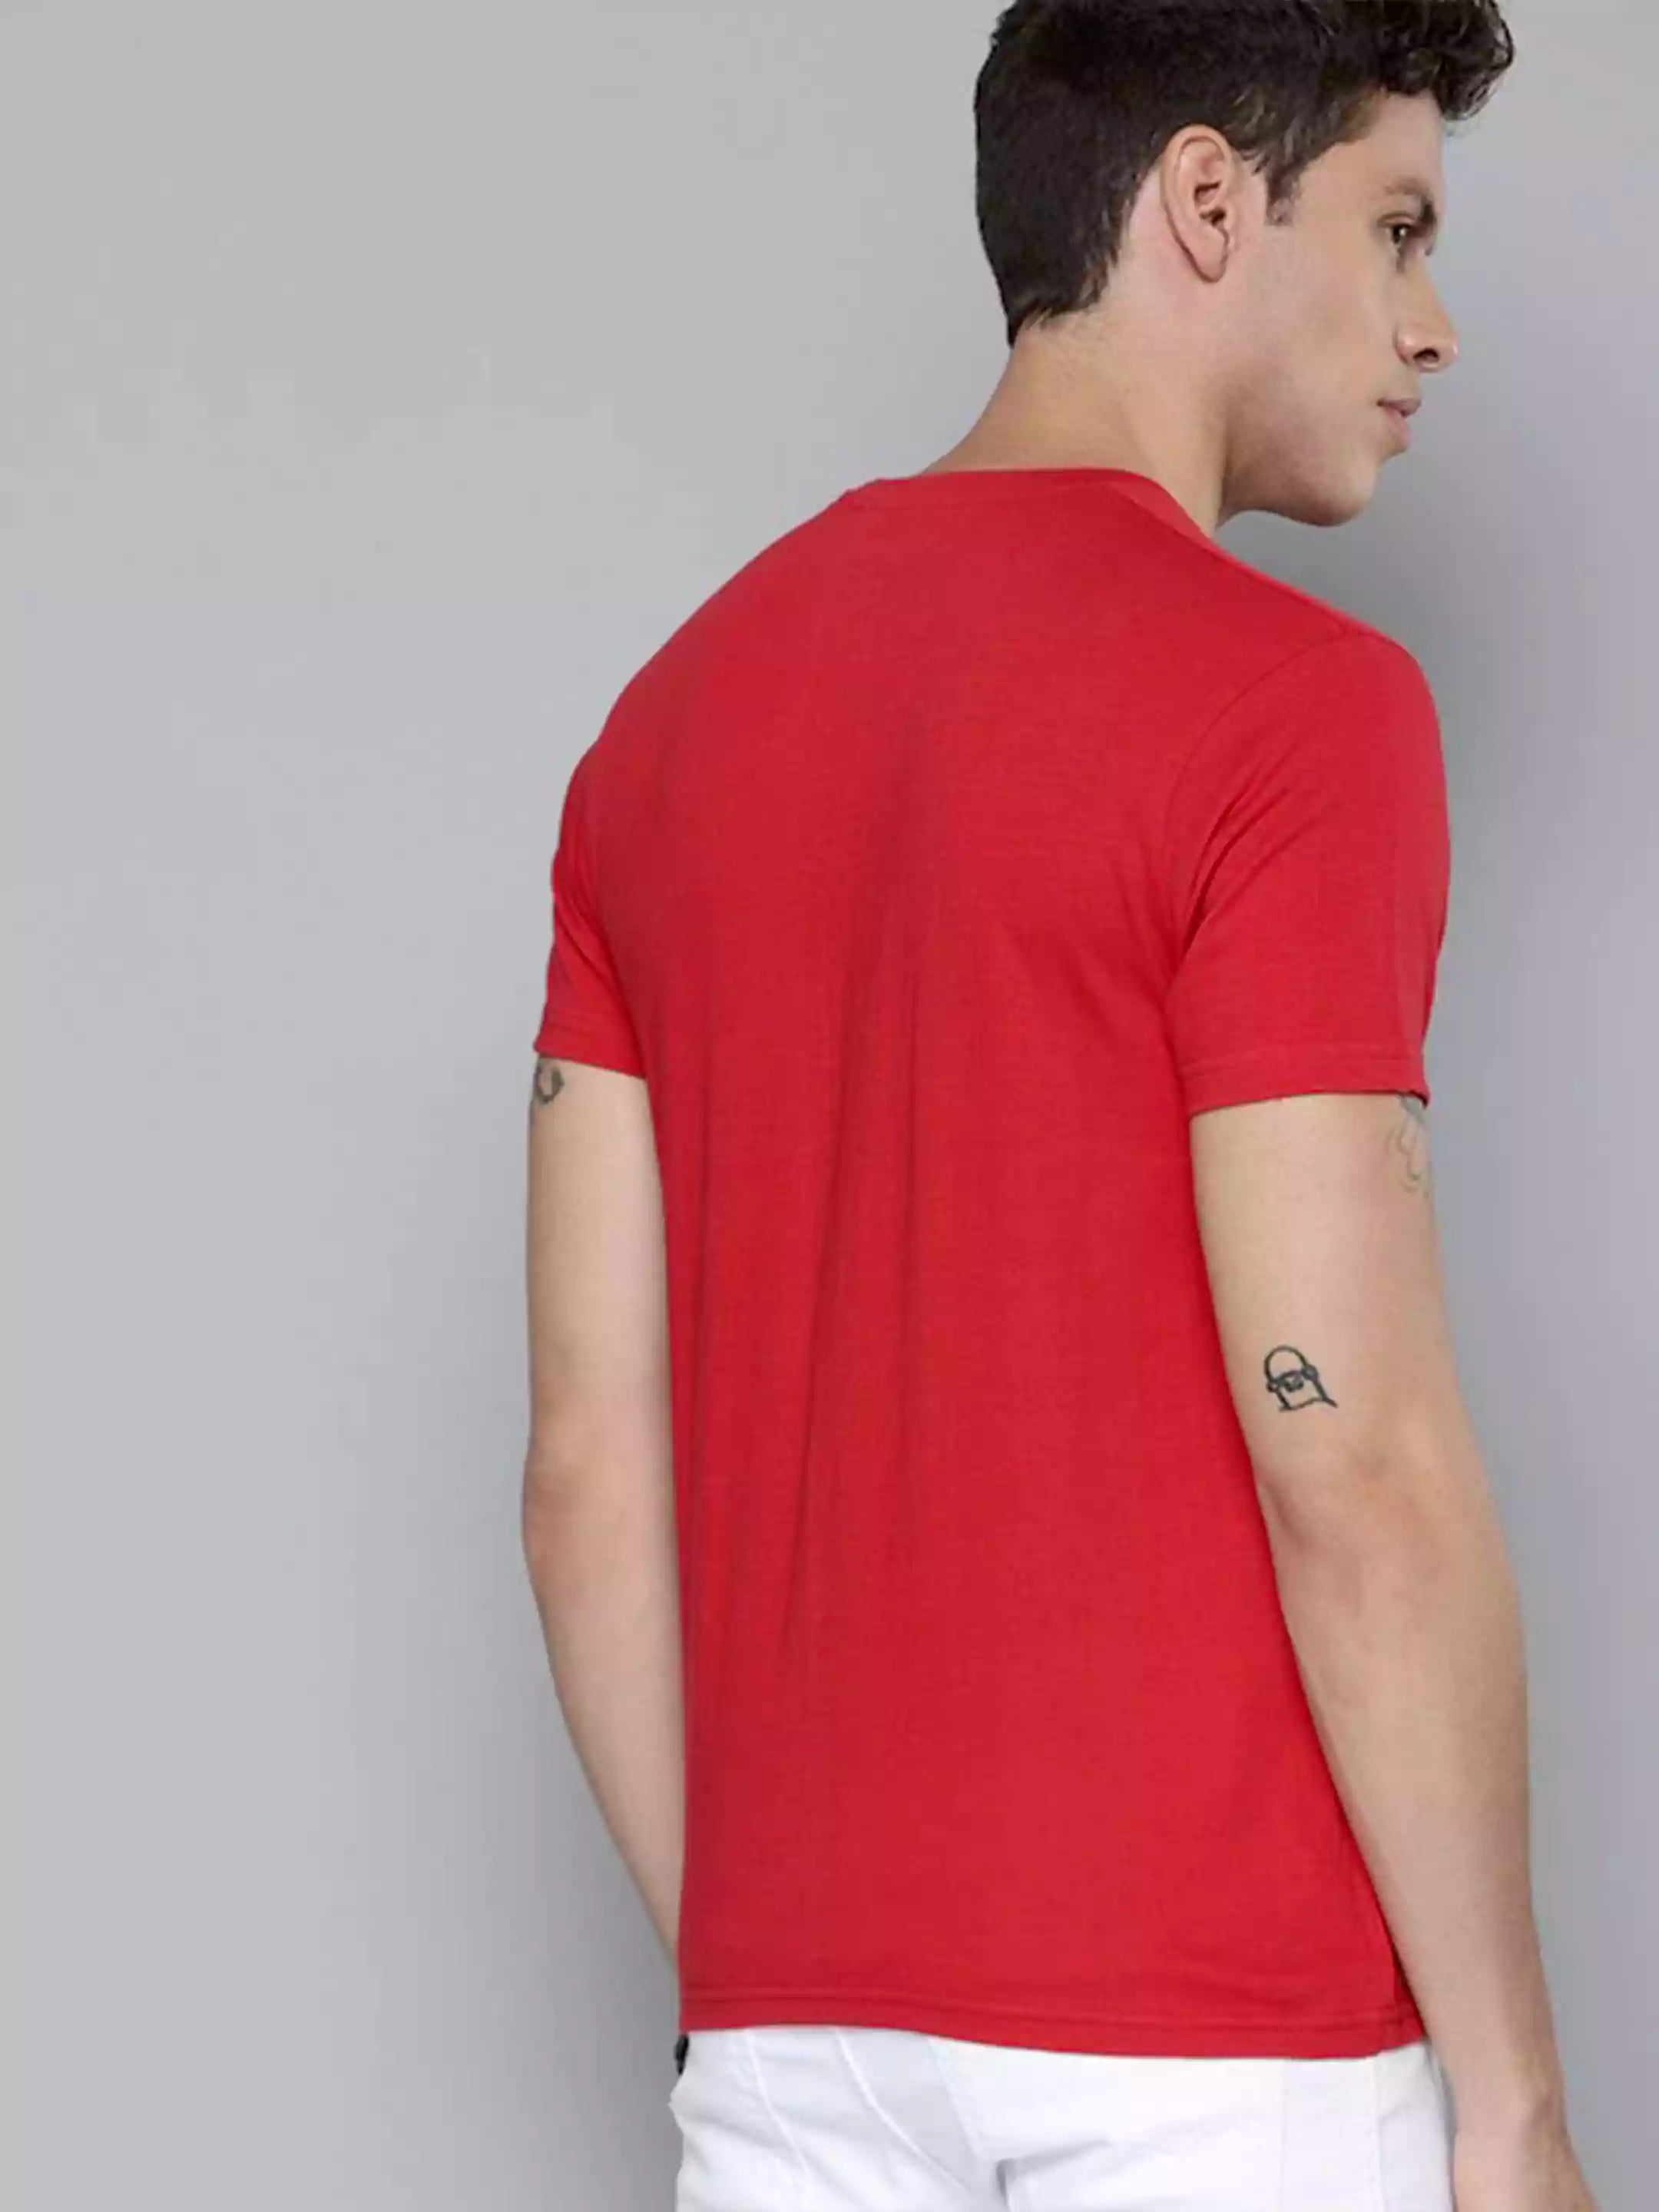 Professional Over thinker - Sukhiaatma Unisex Graphic Printed RED T-shirt